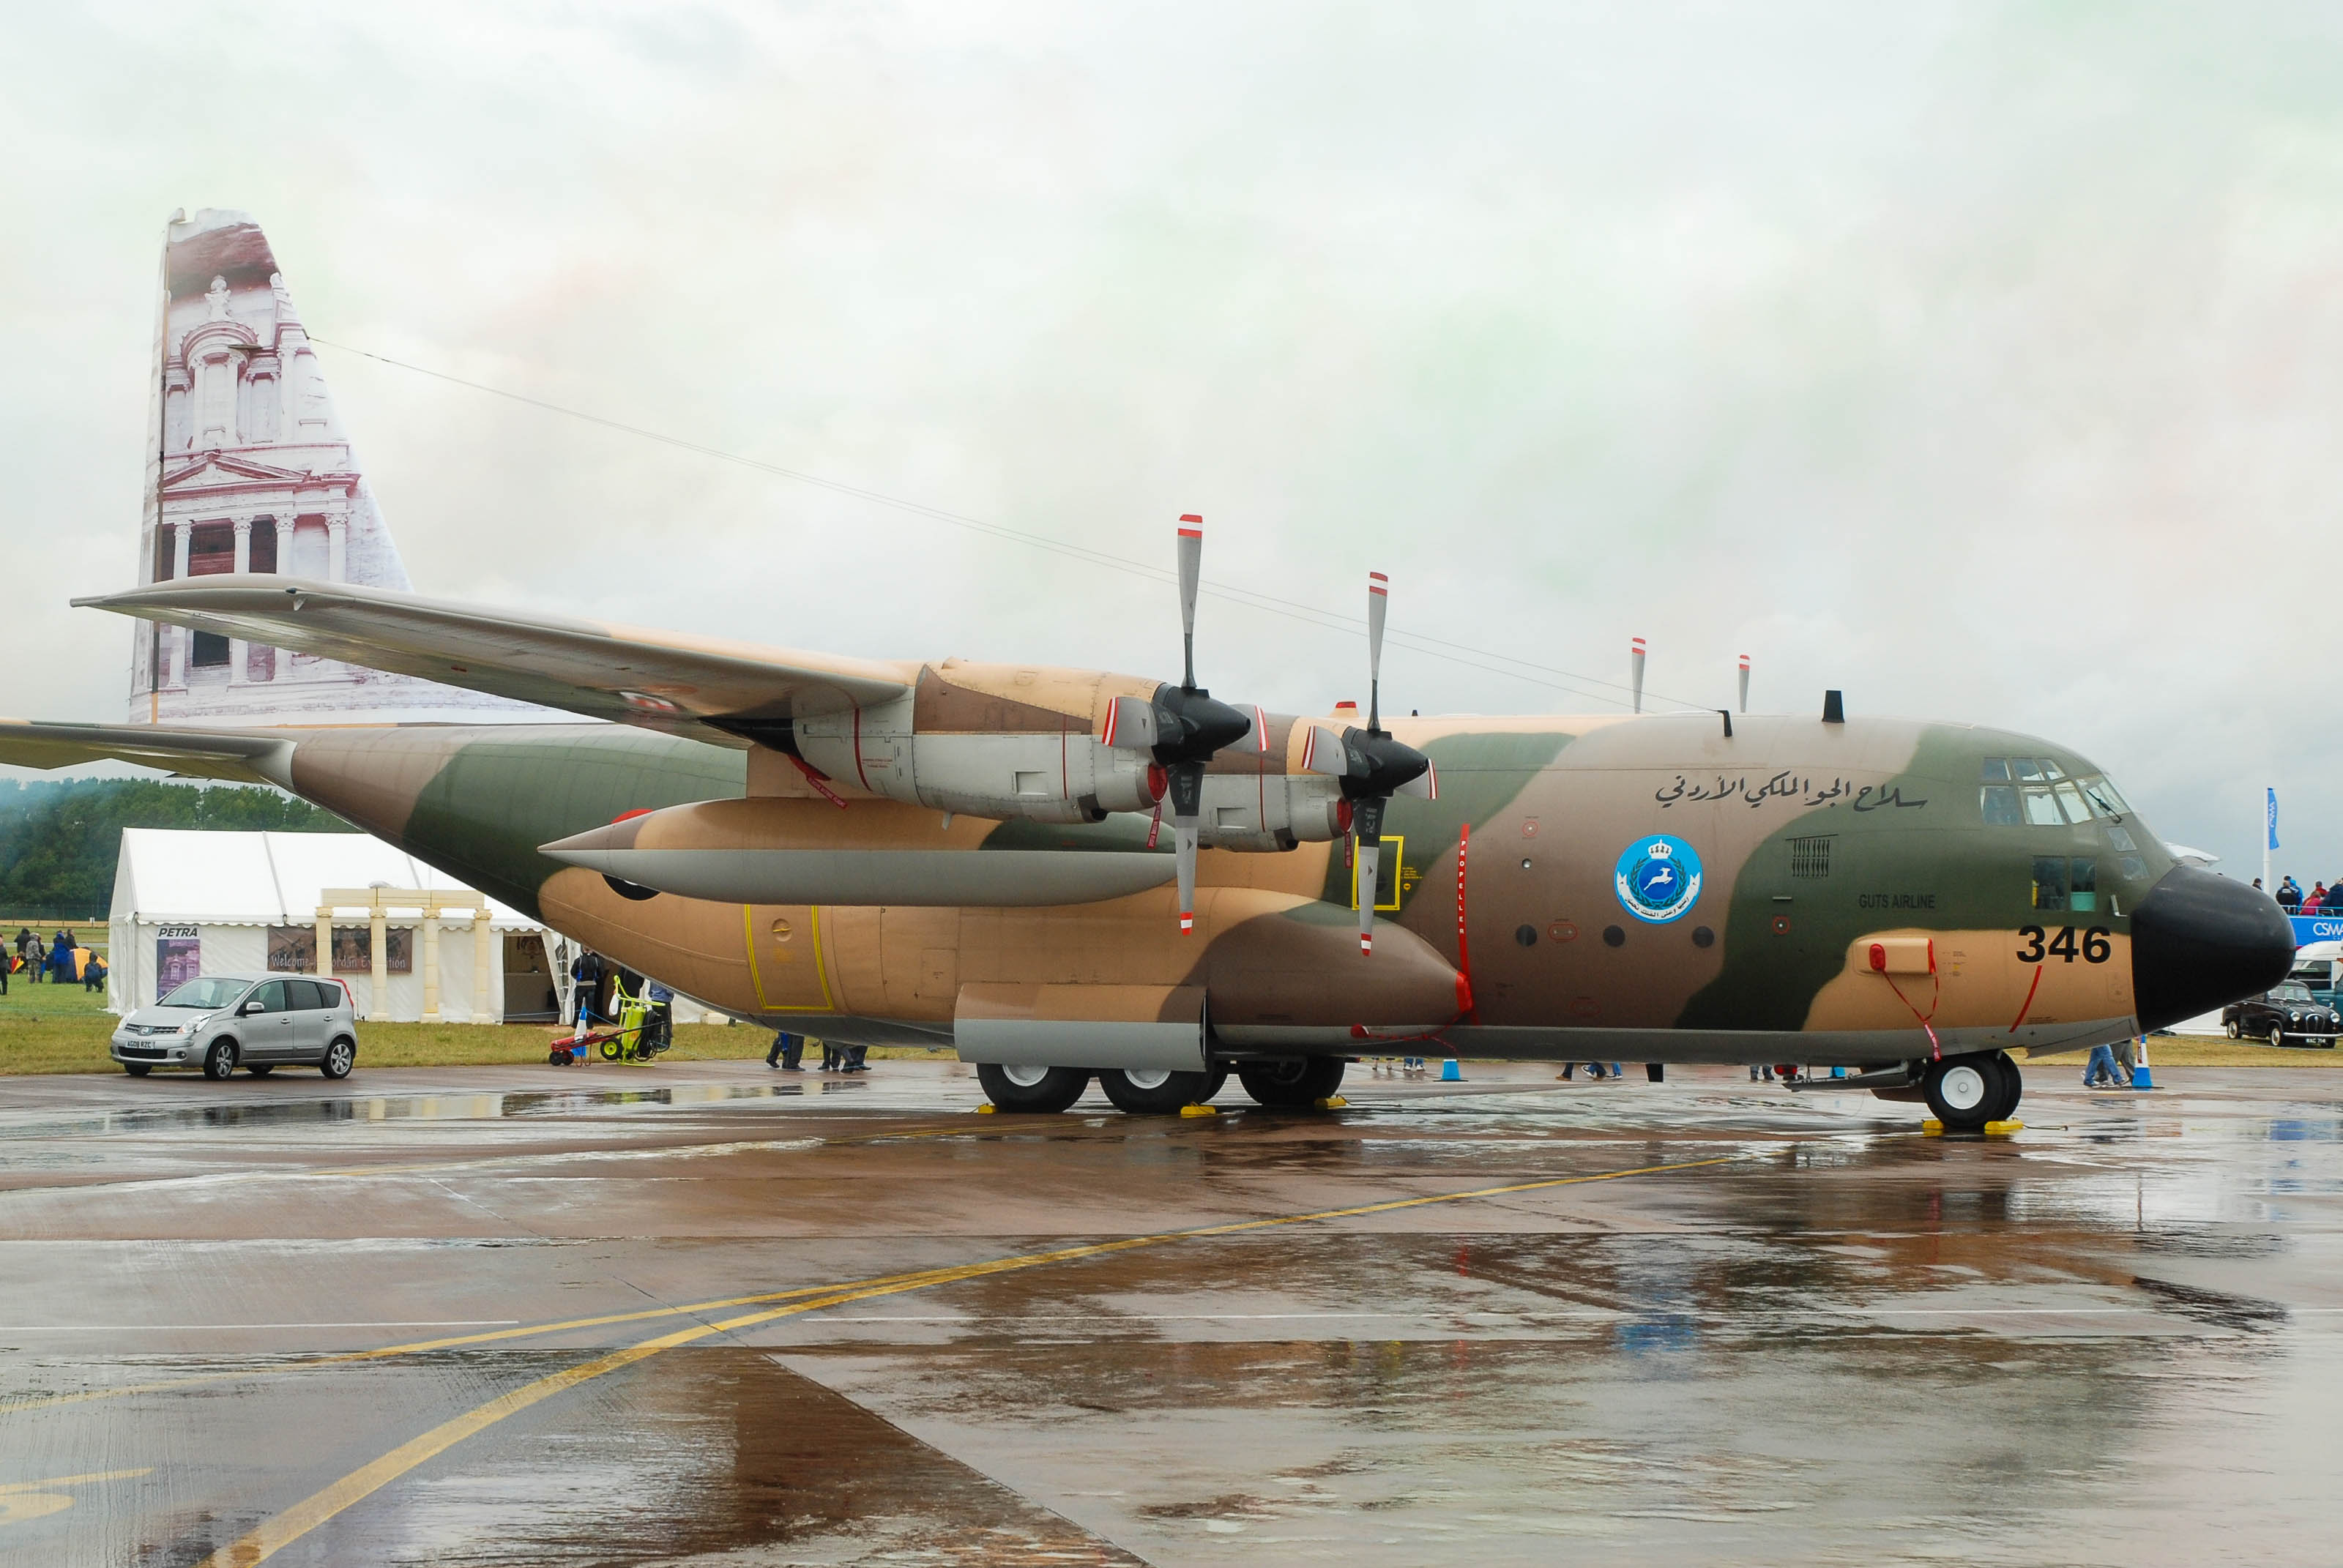 346/346 RJAF - Royal Jordanian Air Force Lockheed C-130 Hercules Airframe Information - AVSpotters.com